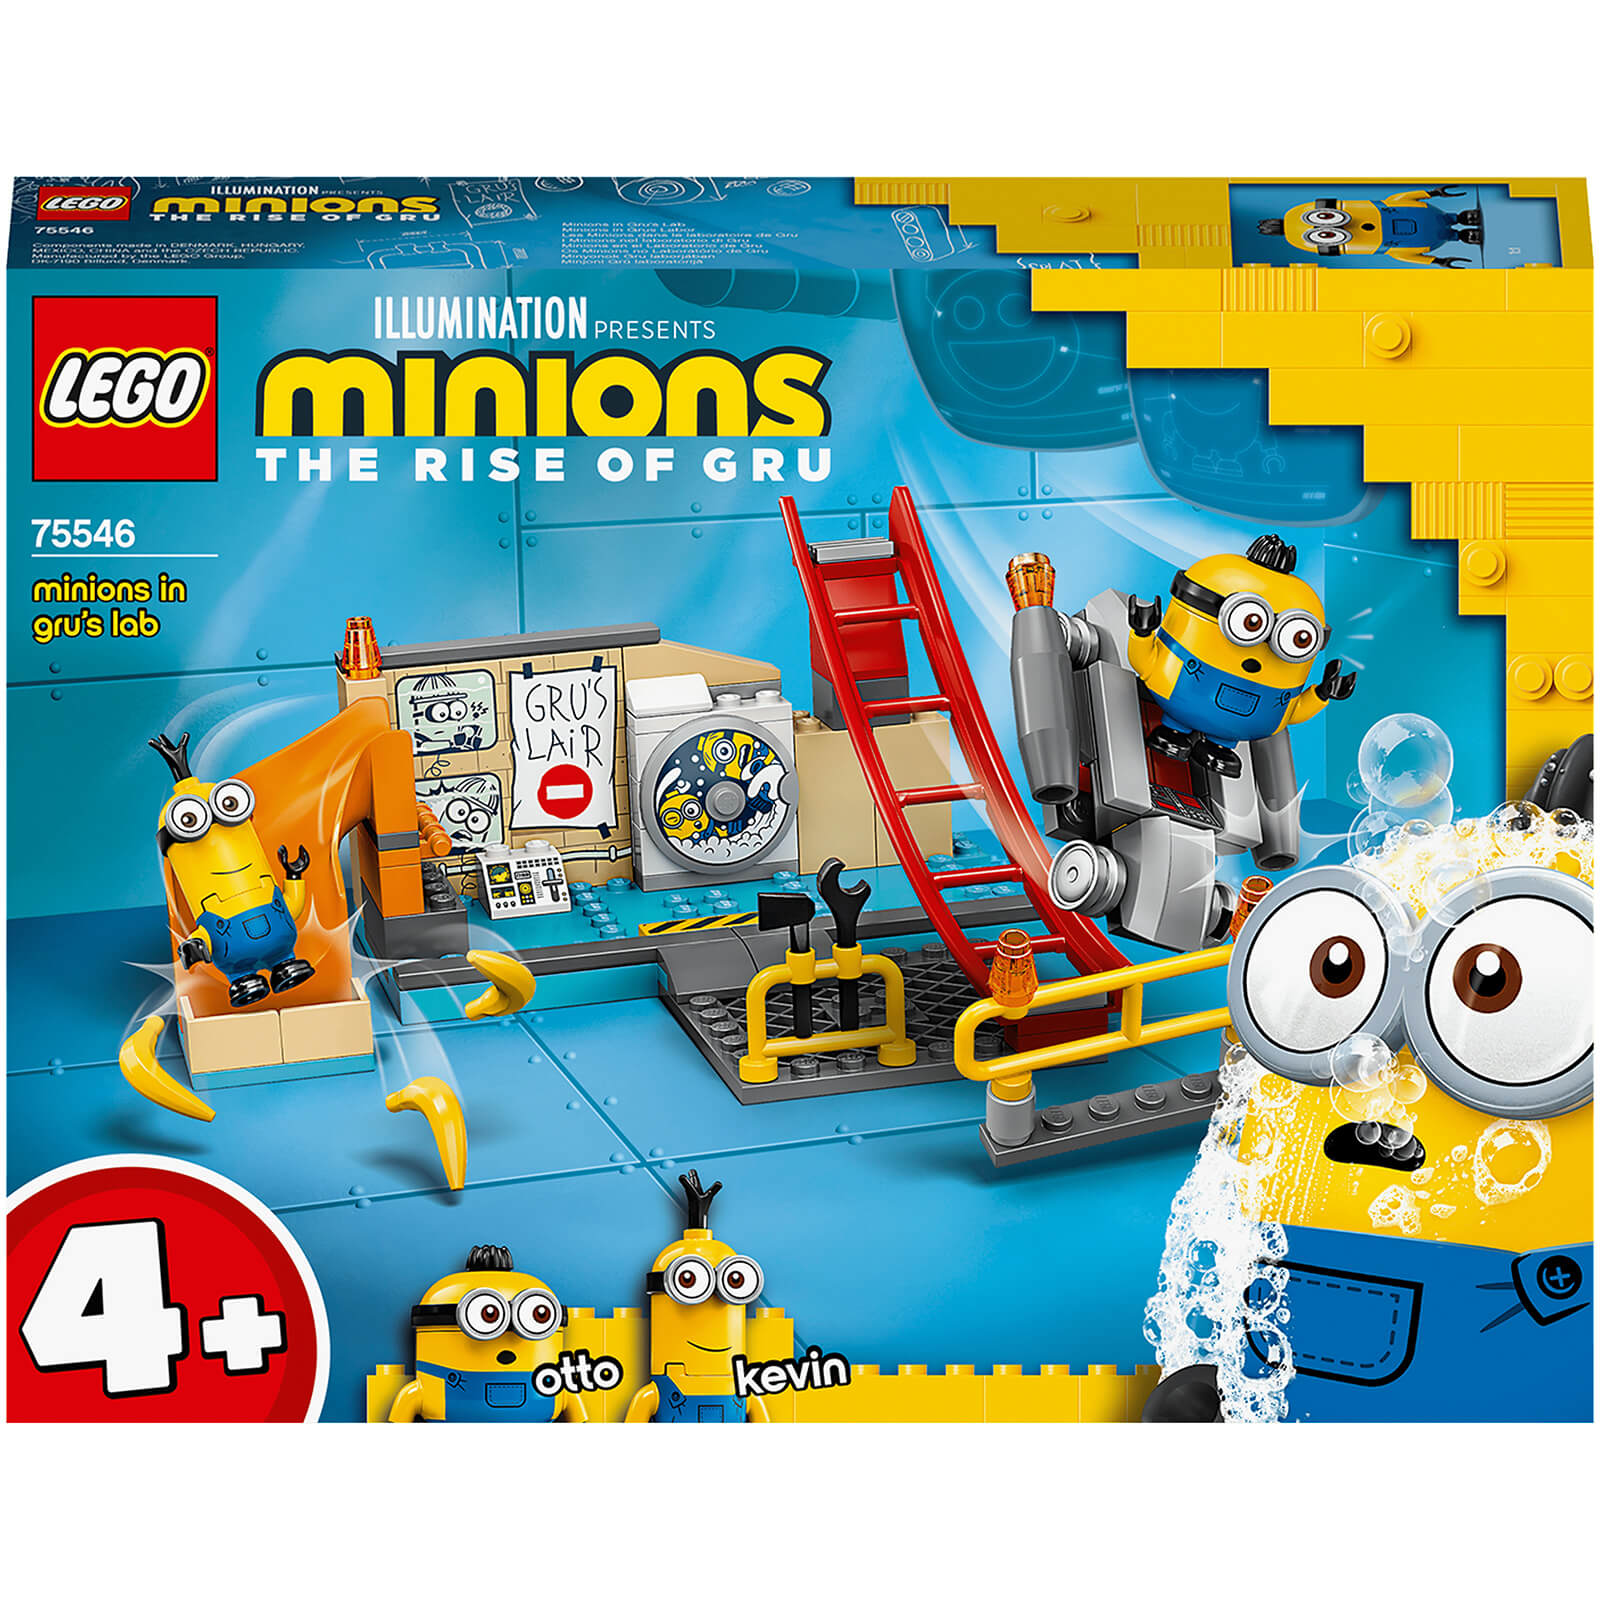 LEGO 4+ Minions: in Grus Lab Building Set (75546)